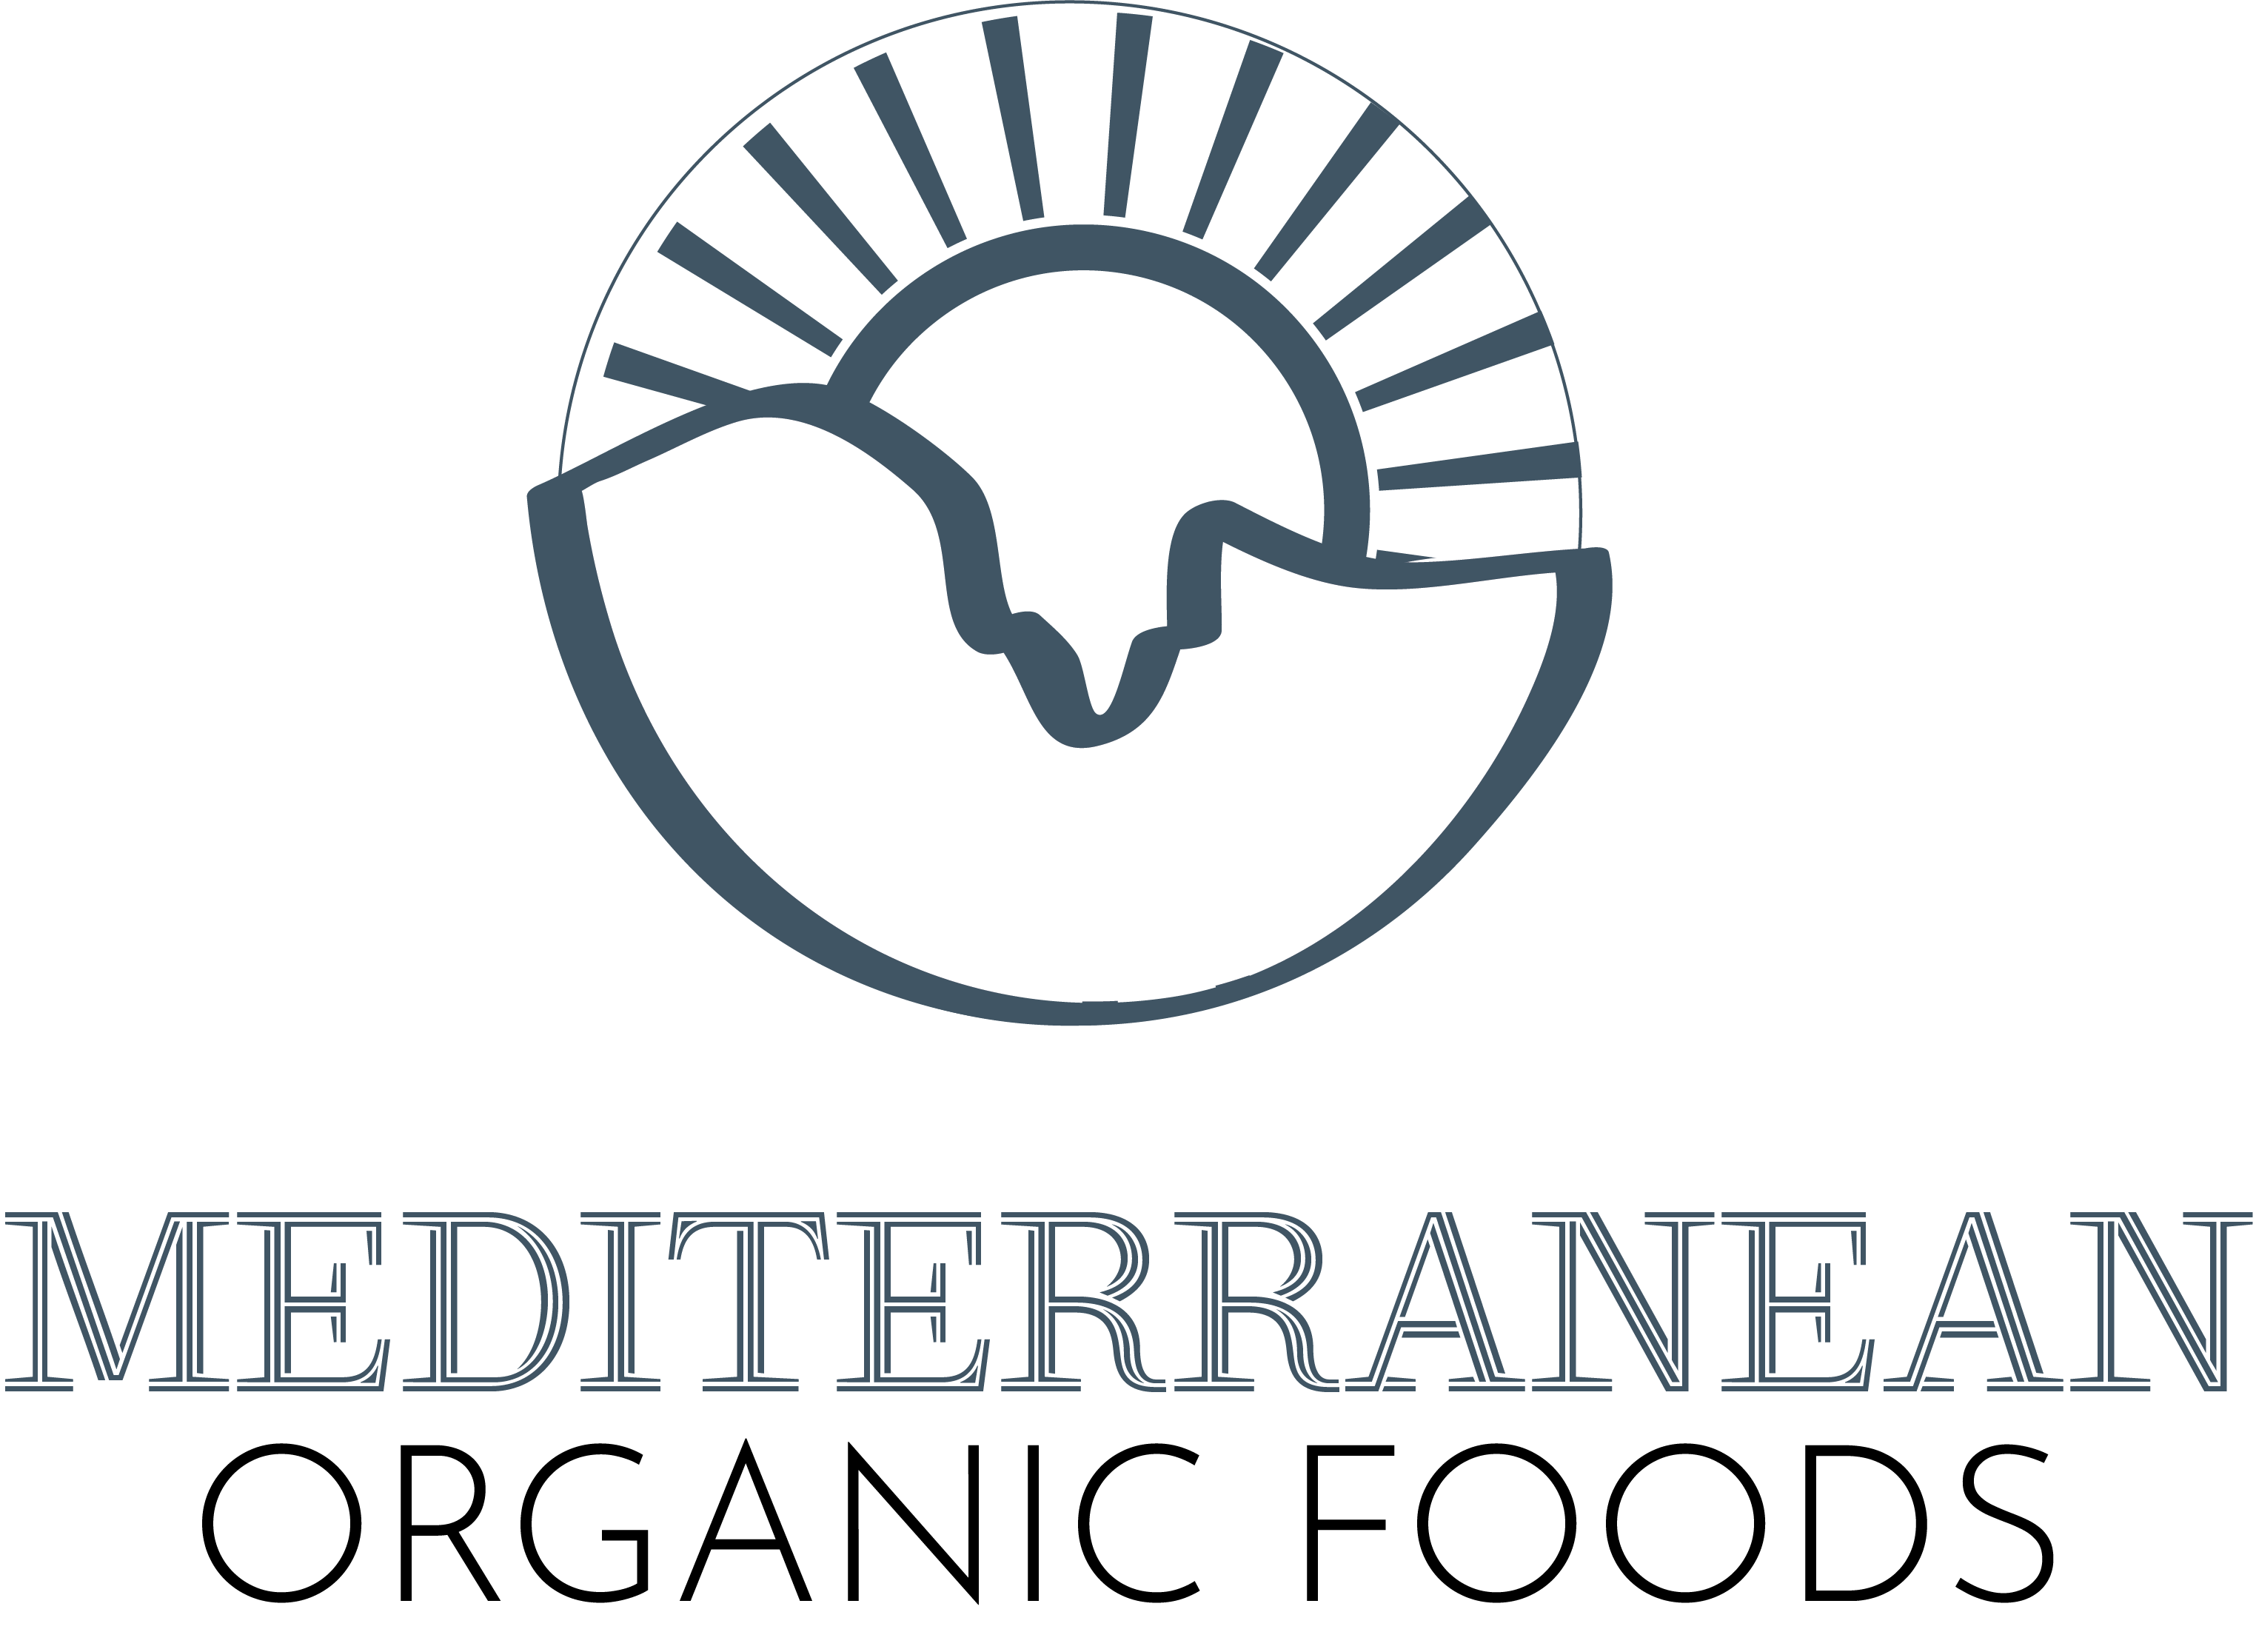 Mediterranean organic foods logo